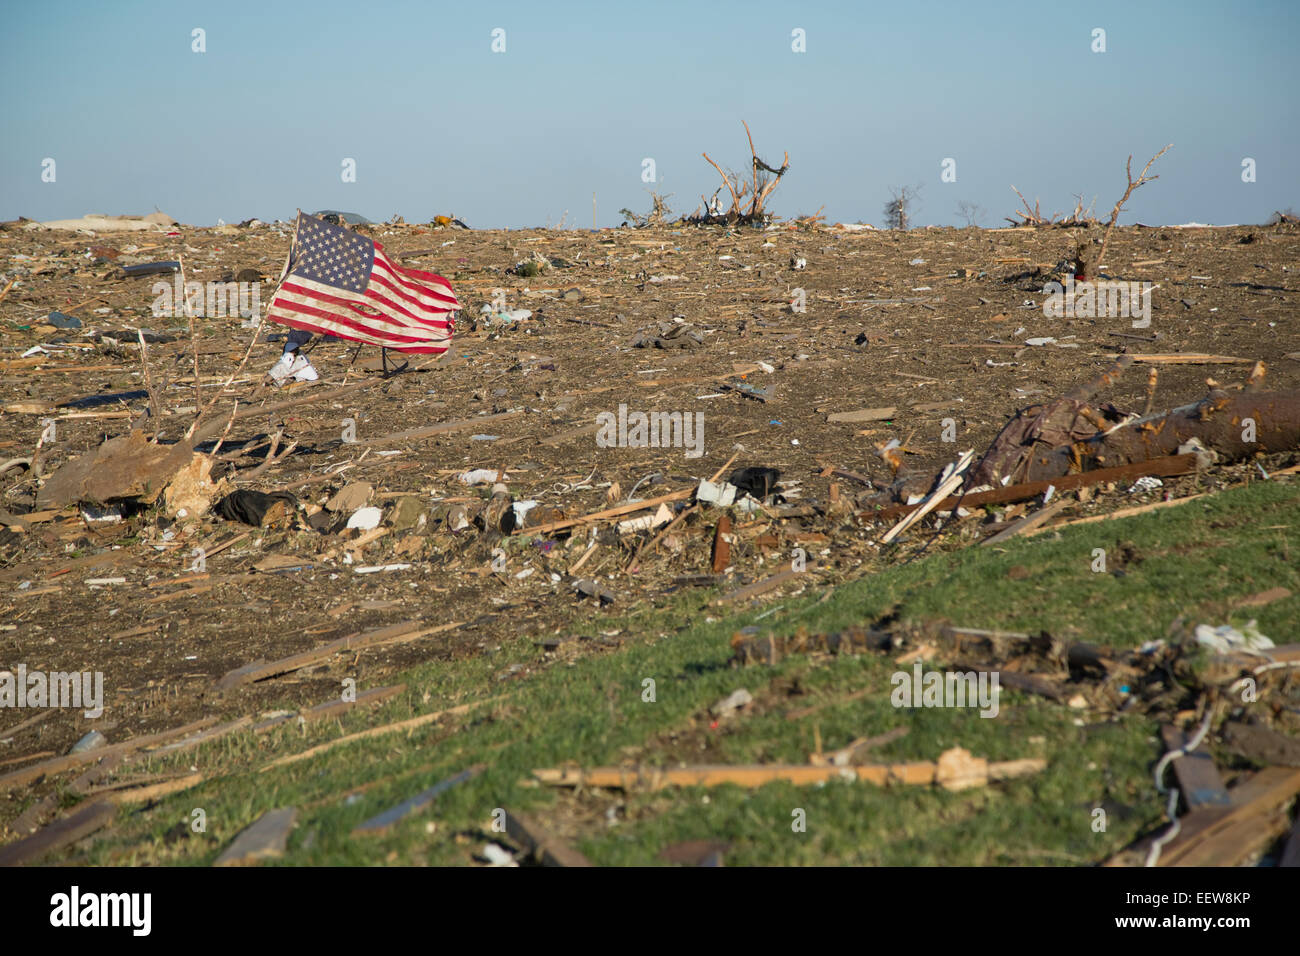 American flag in debris after tornado Stock Photo